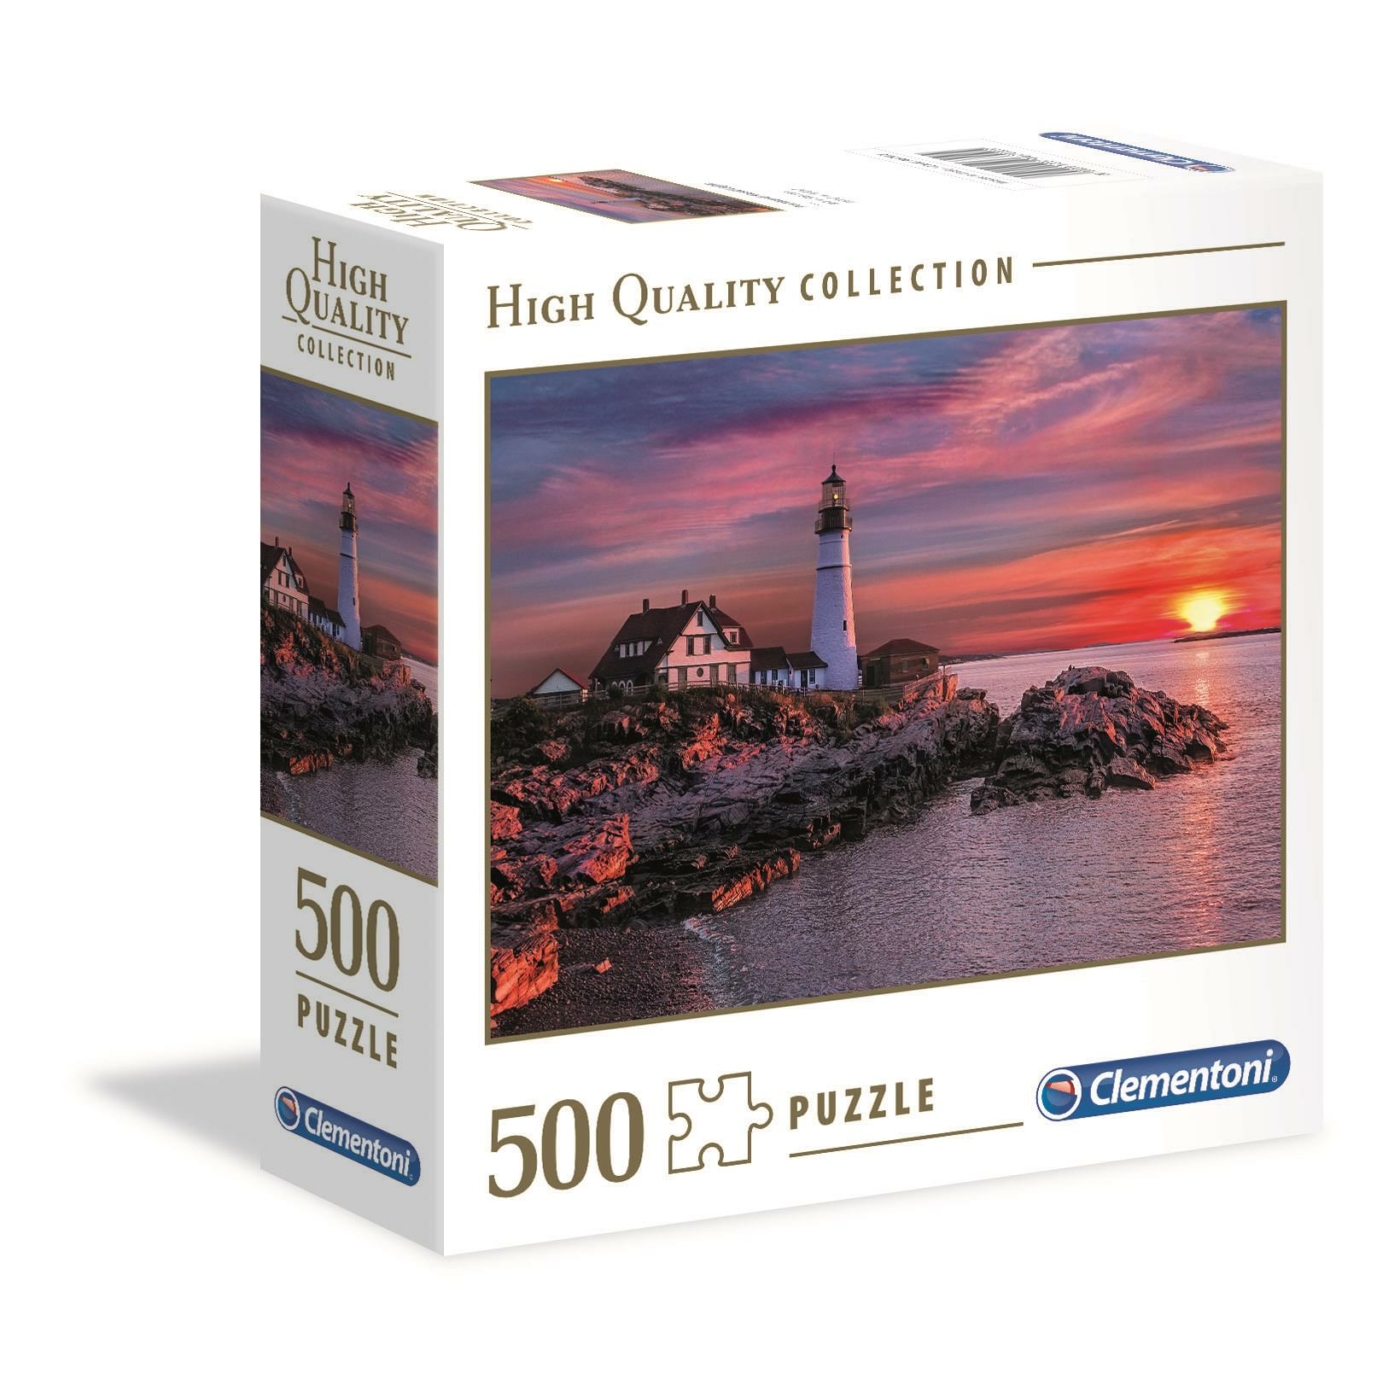 500 db-os High Quality Collection puzzle négyzet alakú dobozban - Naplemente, Portland